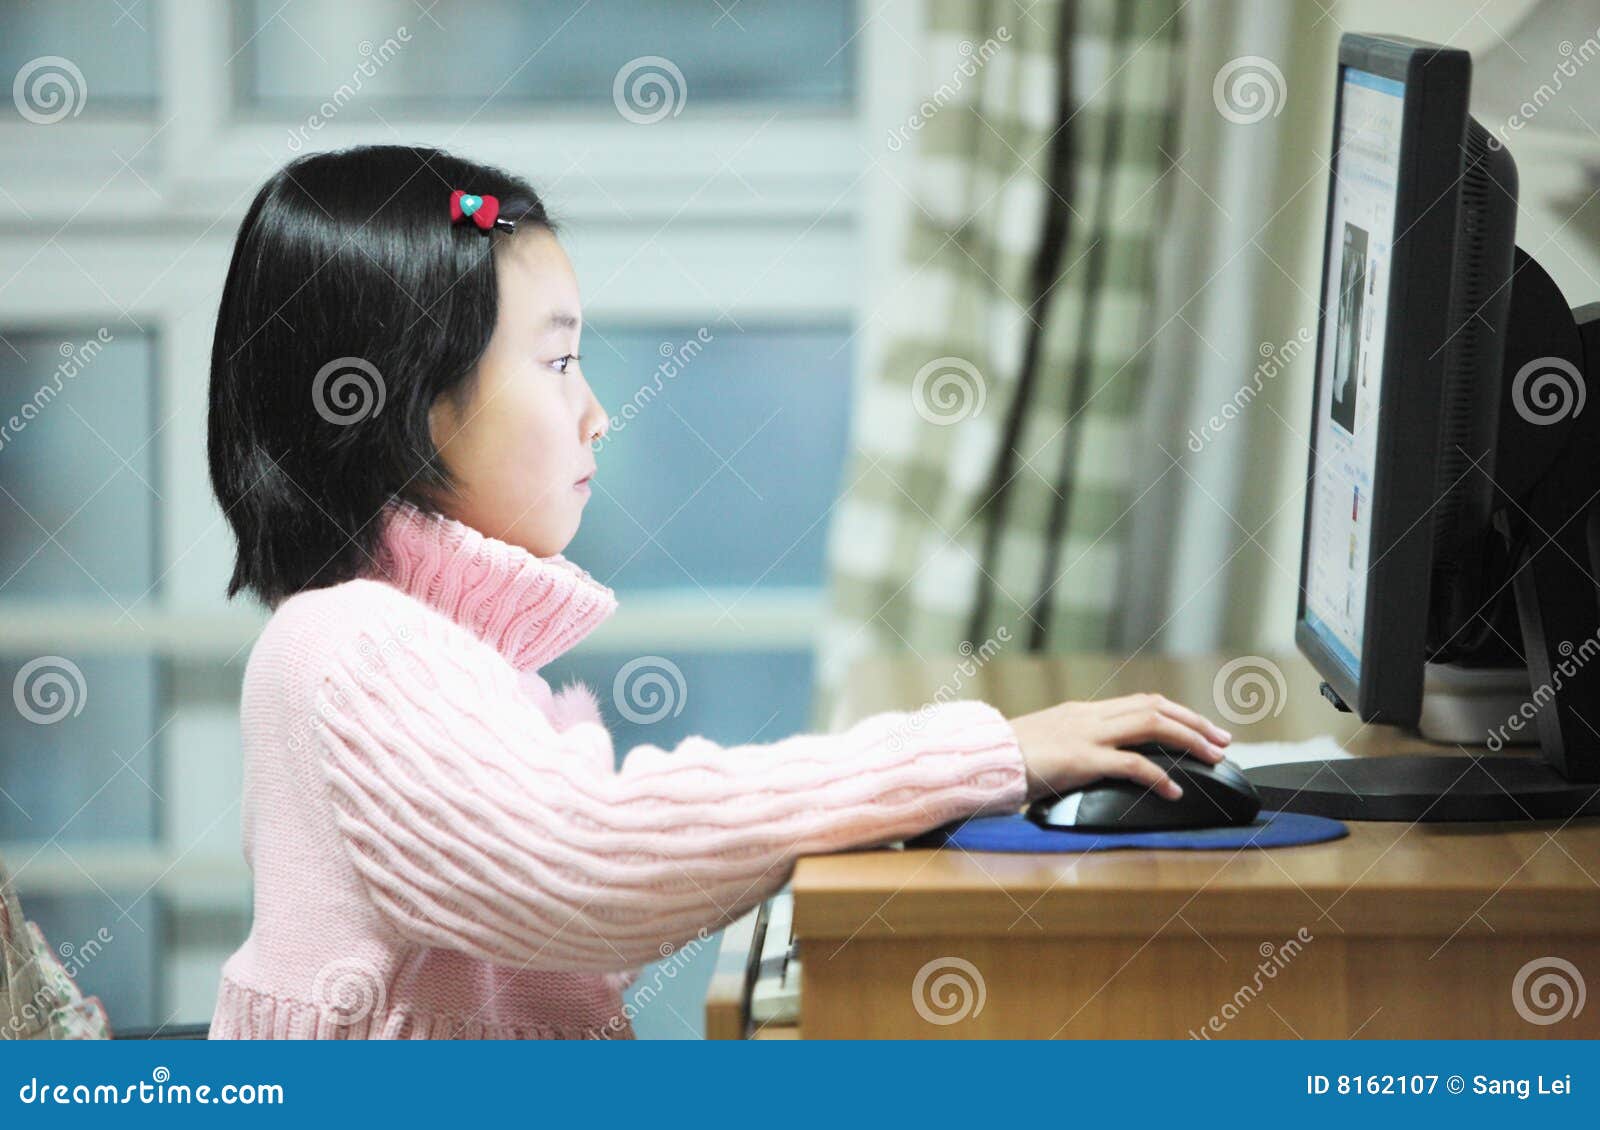 child use computer